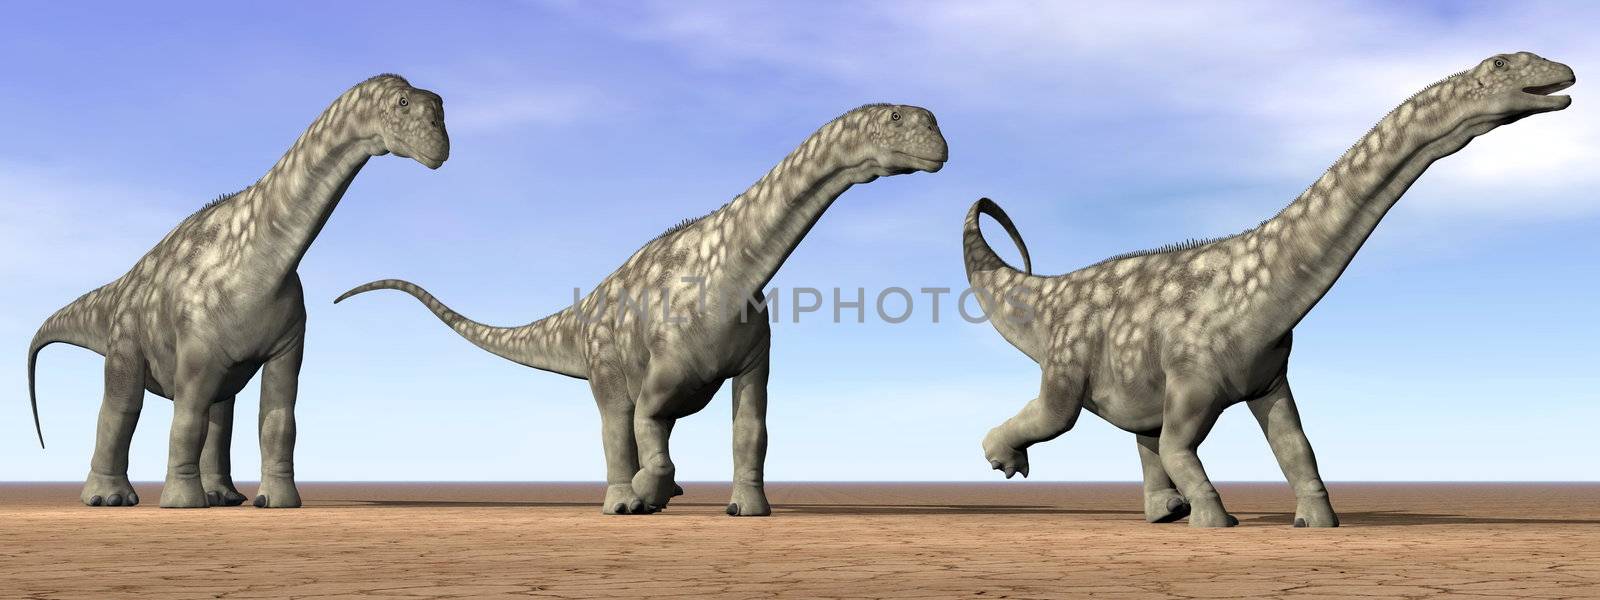 Three argentinosaurus dinosaurs standing in the desert by daylight